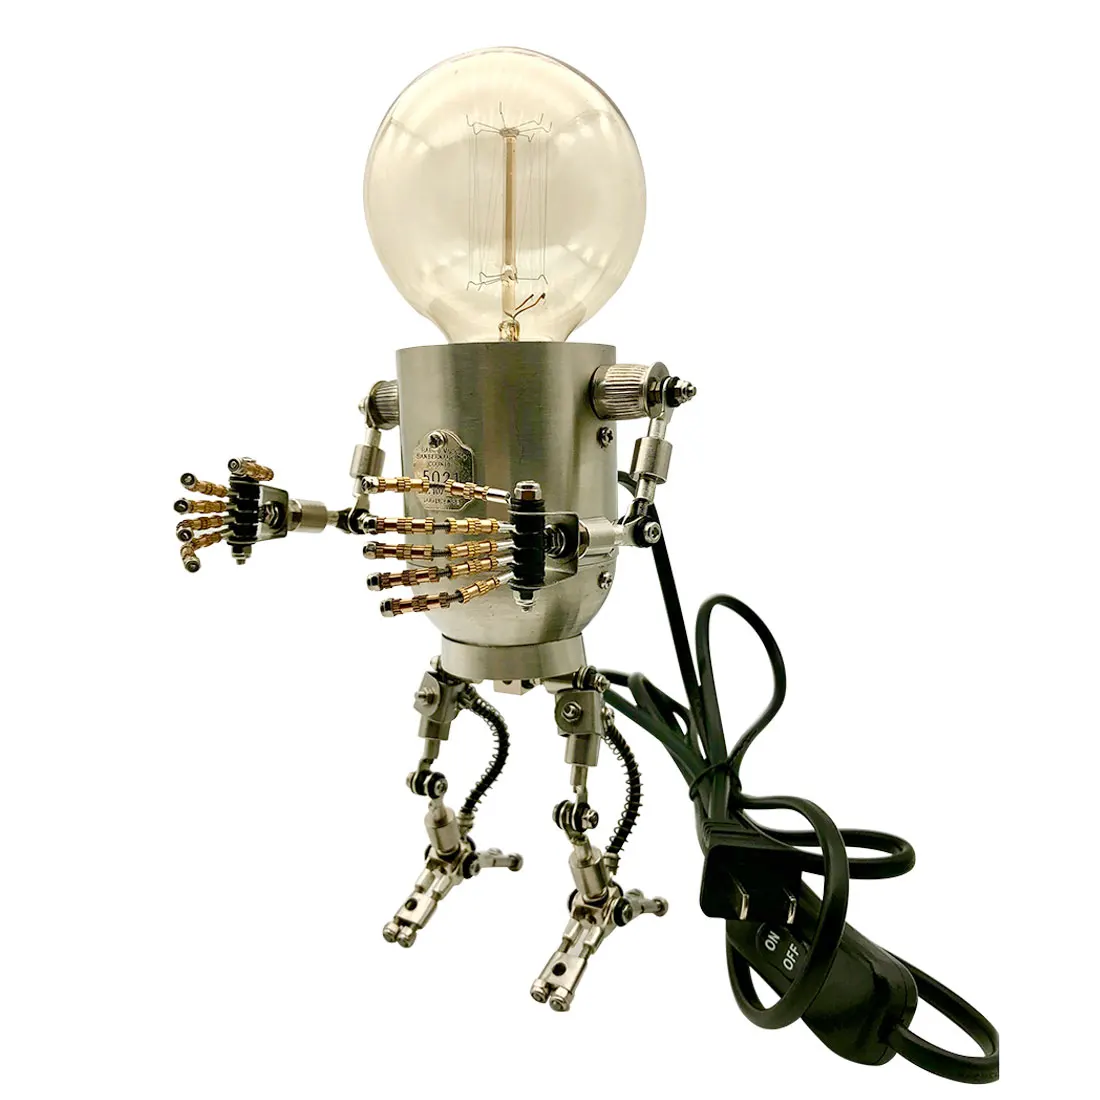 

250+Pcs DIY 3D Steampunk Metal Robot Mr Gort Hobby Self-Assembly Model Kits To Build Virgo Metal Model With LED String Lights